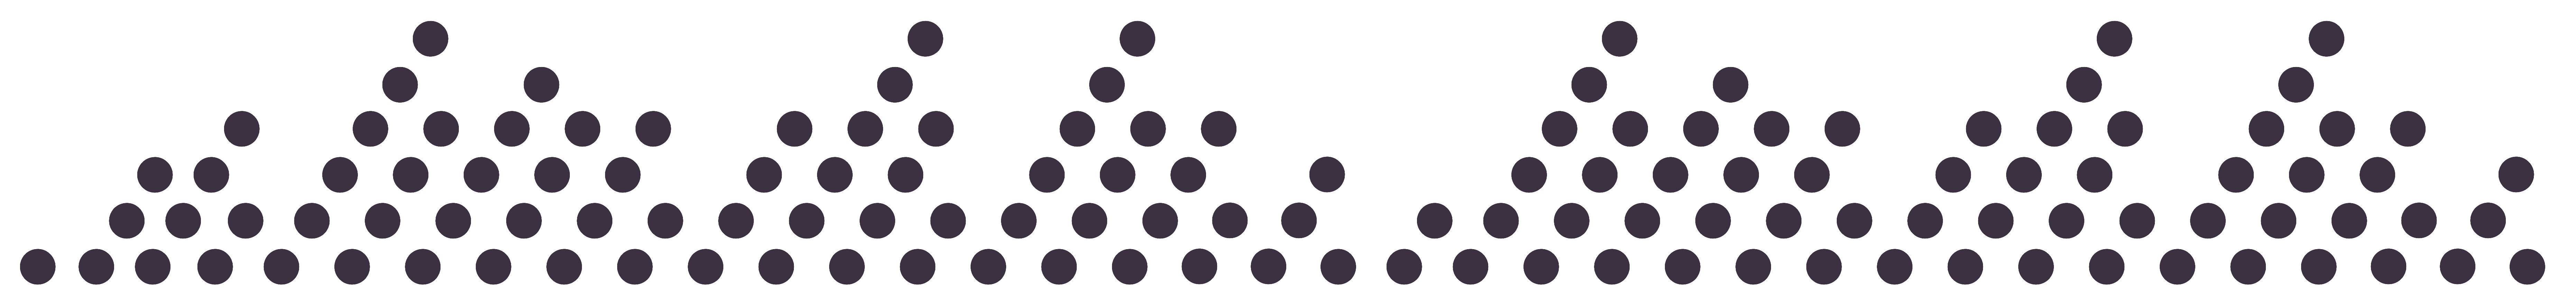 Stacks of purple dots